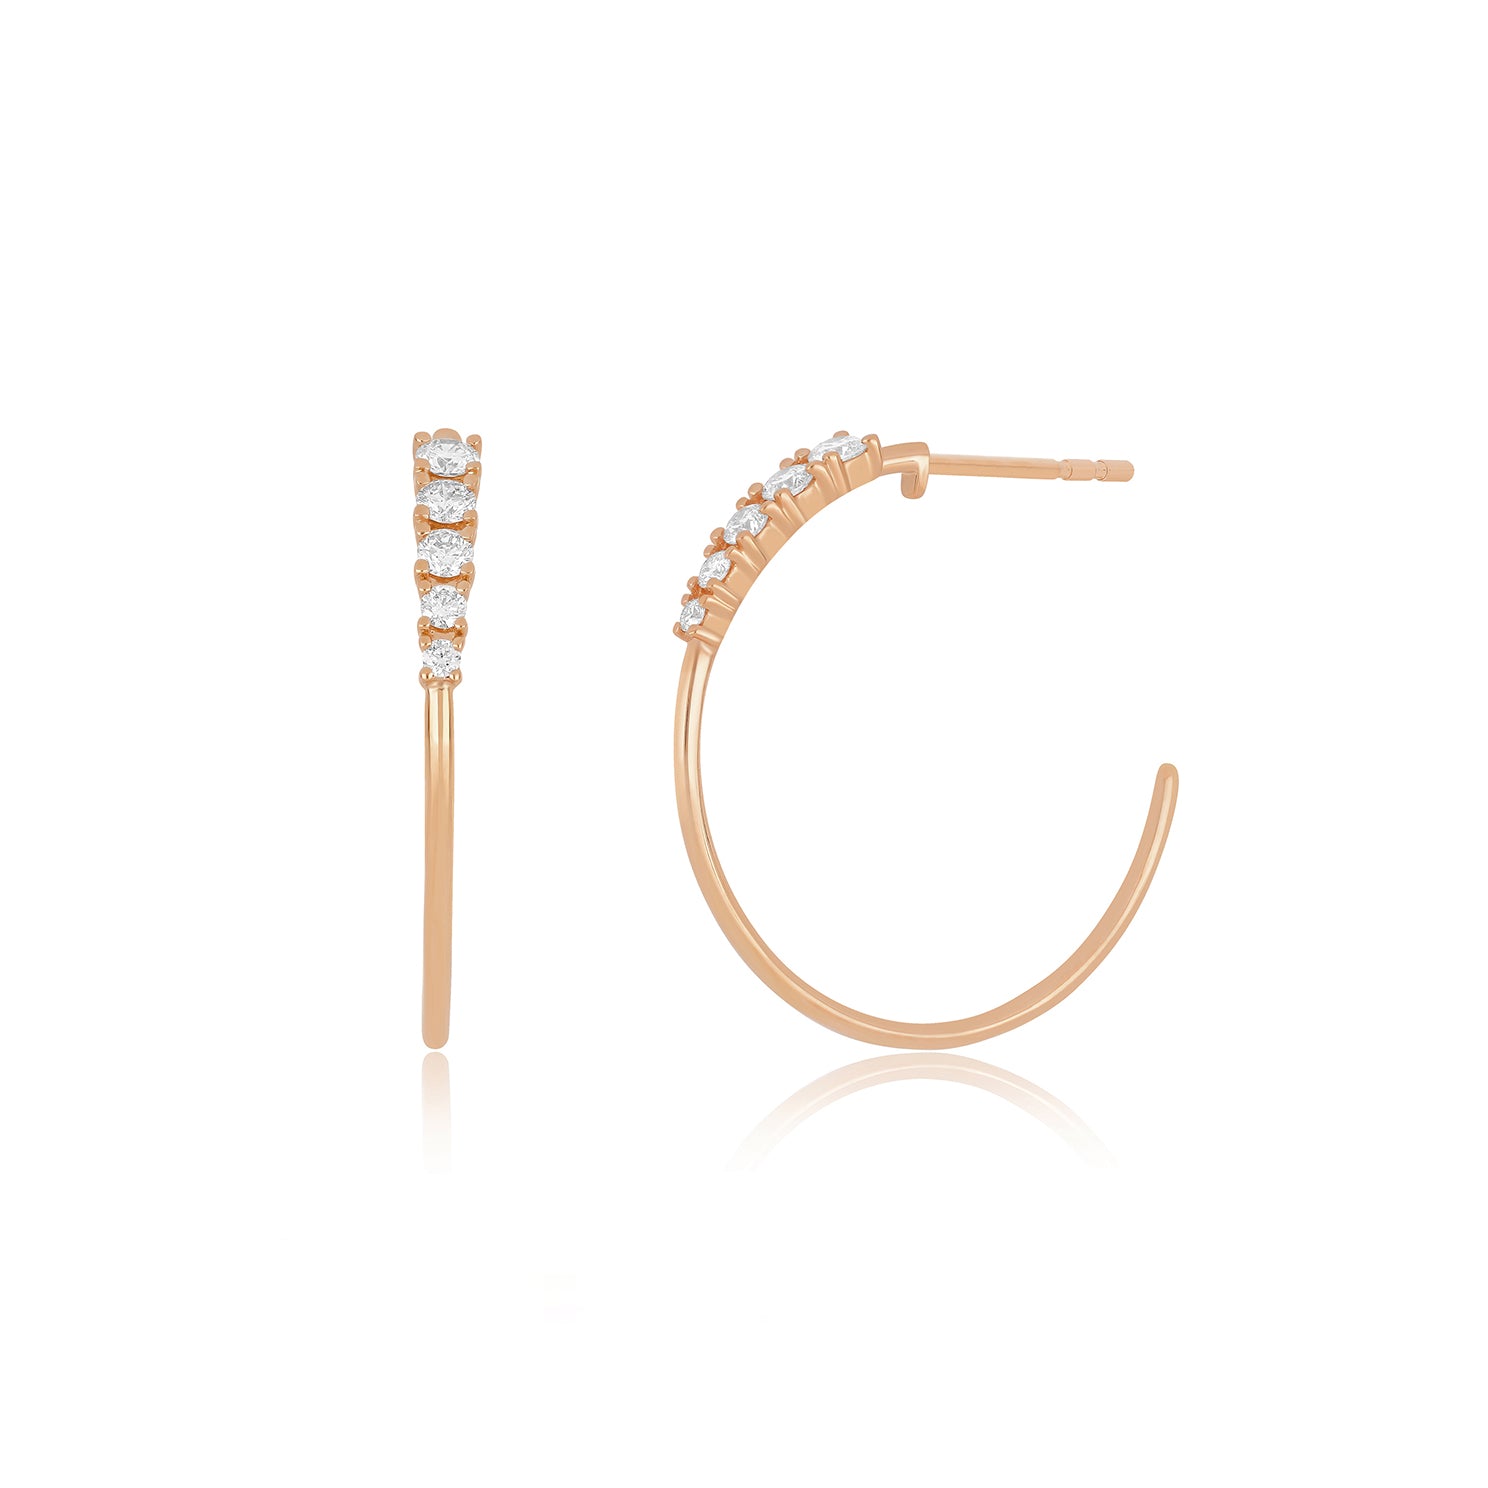 Diamond & Gold Hoop Earrings in 14k rose gold